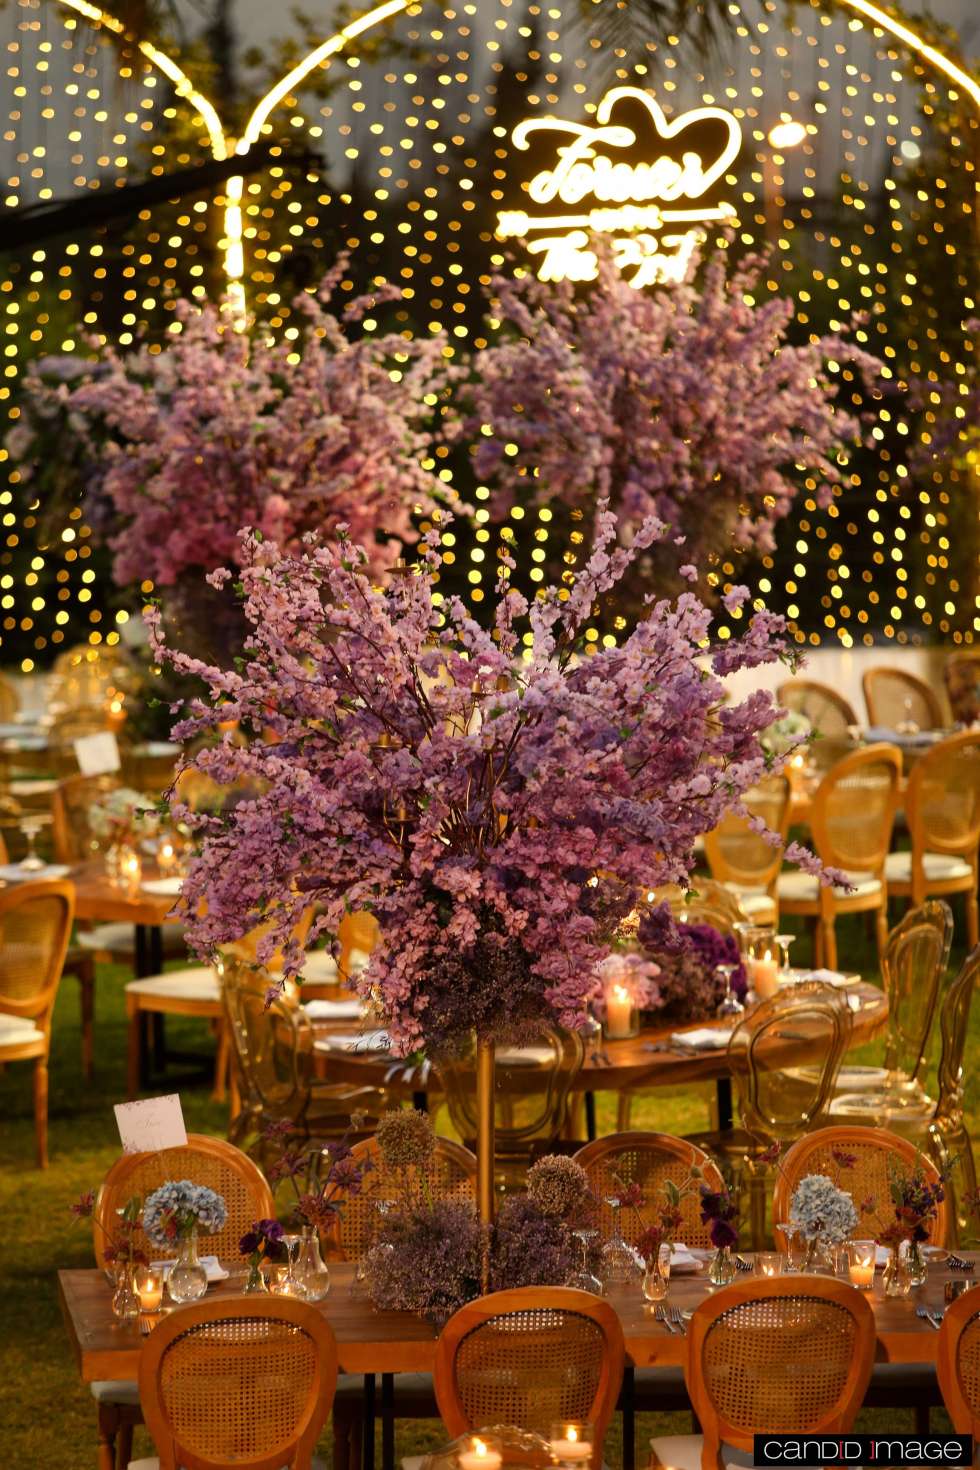 A Purple Garden Wedding in Lebanon